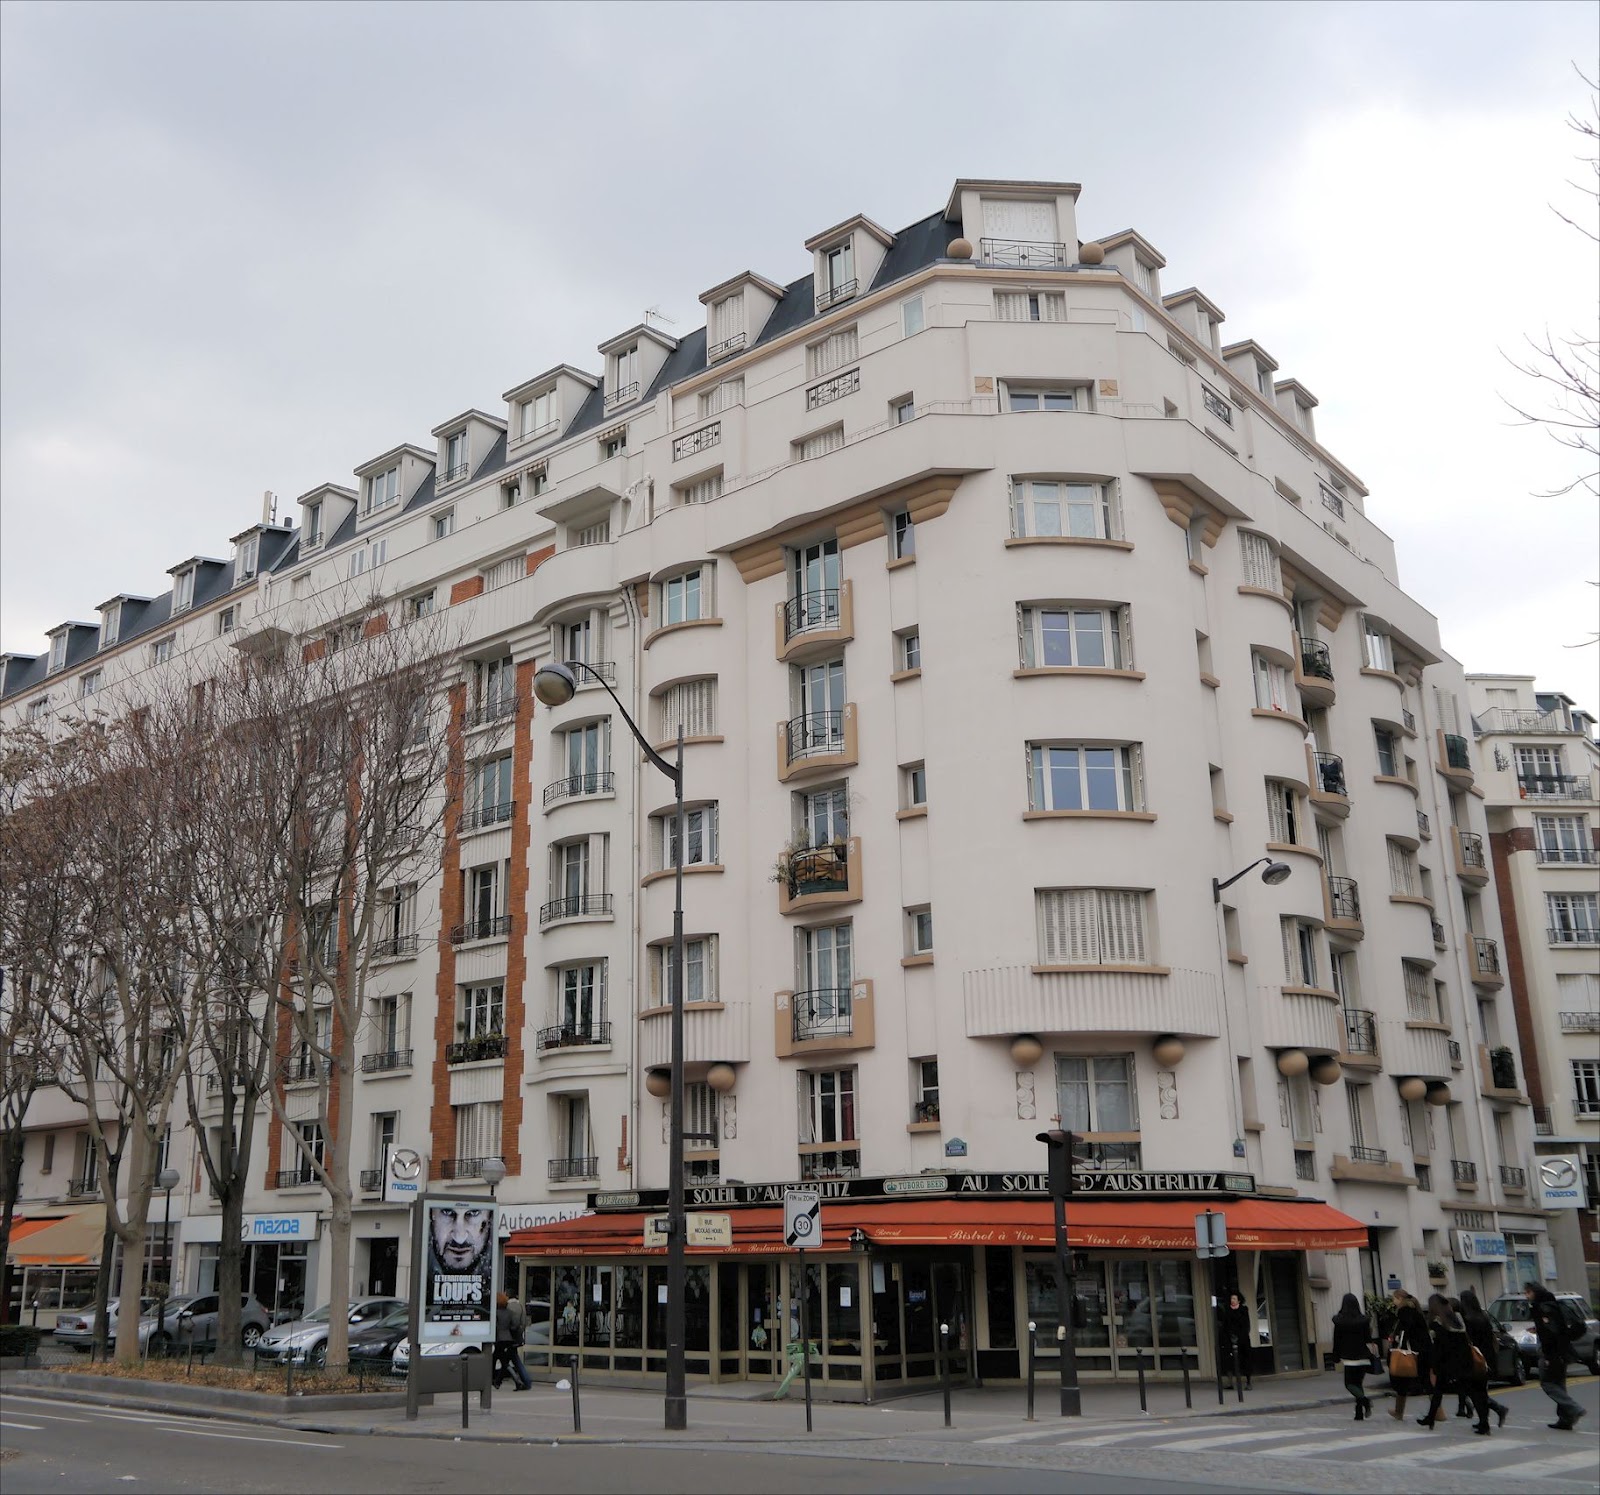 Fachada de brechó parisiense 1 do 4º arrondissement, altura da rue des